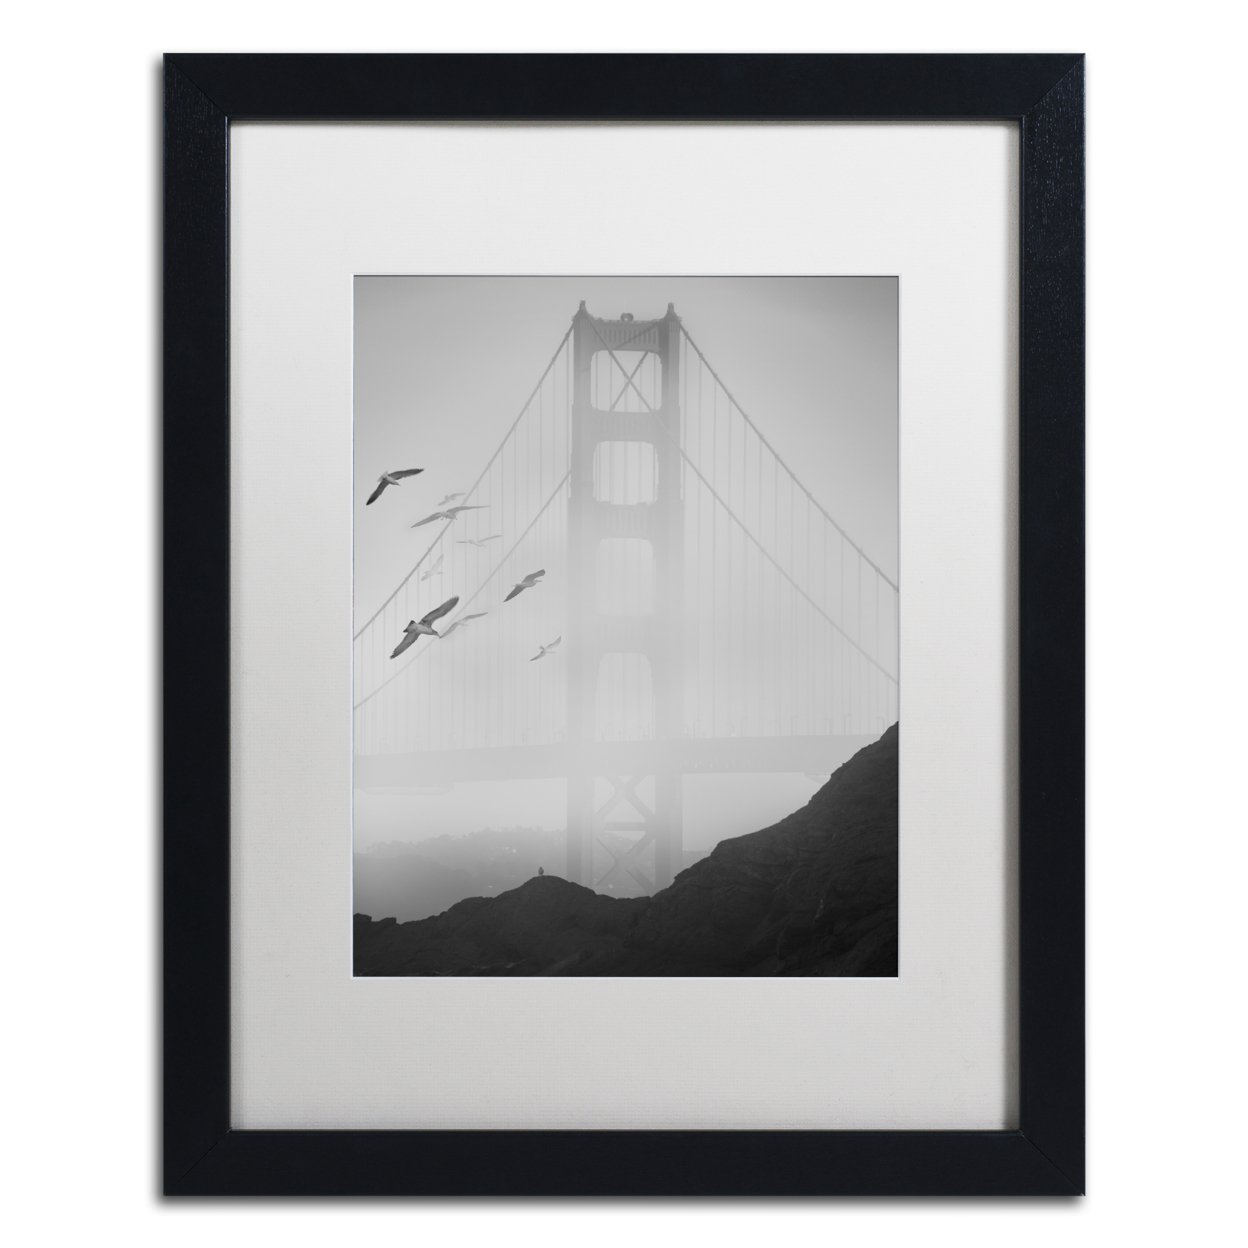 Moises Levy 'Golden Gate Pier And Birds I' Black Wooden Framed Art 18 X 22 Inches